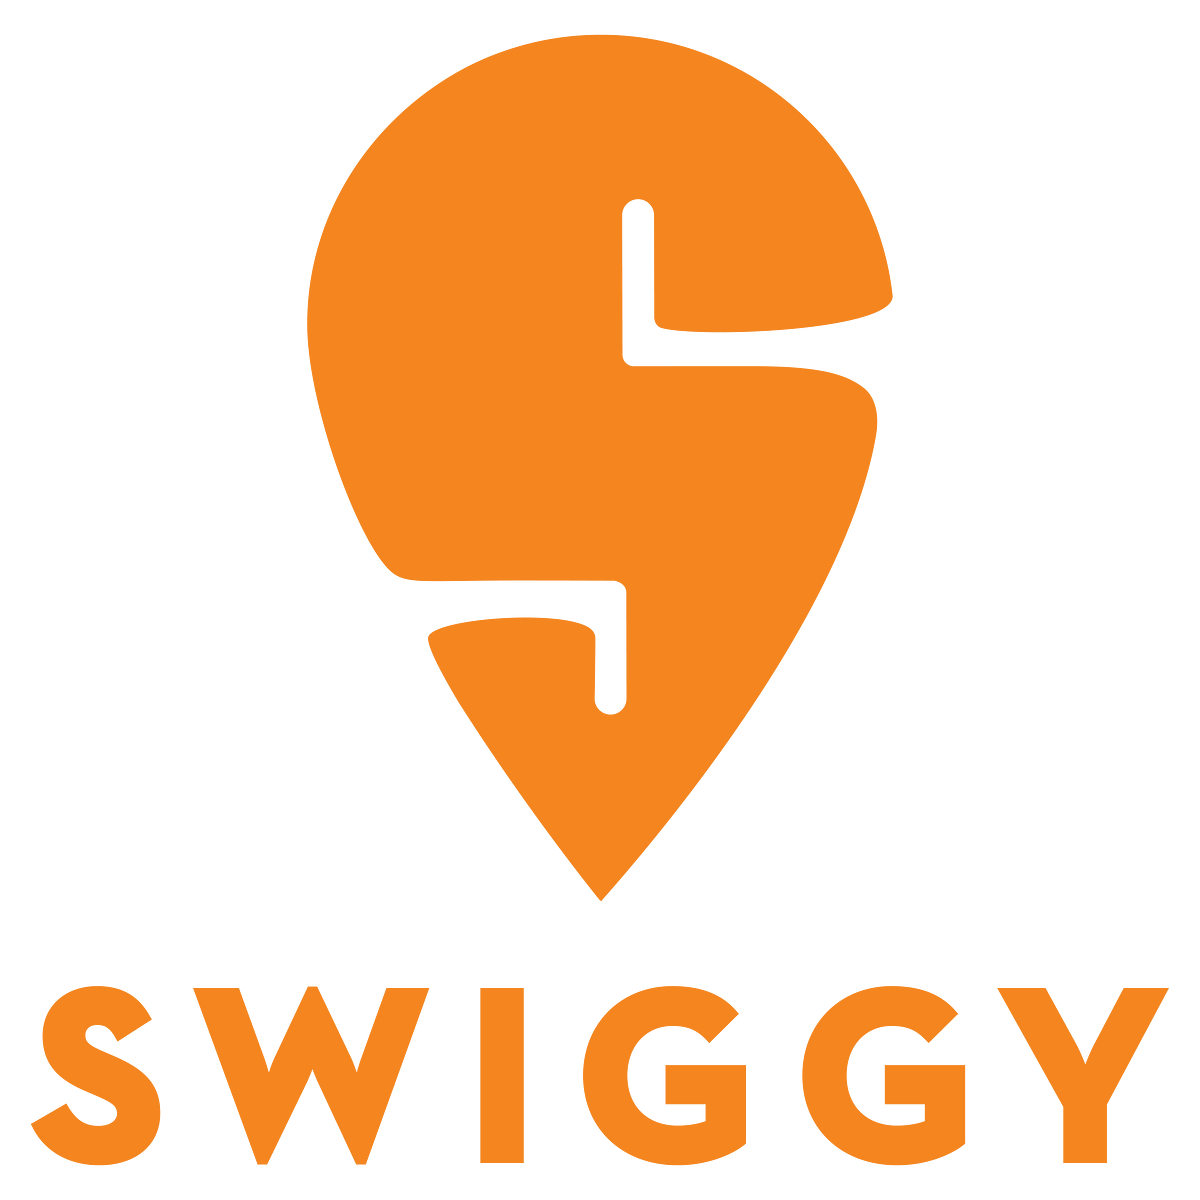 swiggy